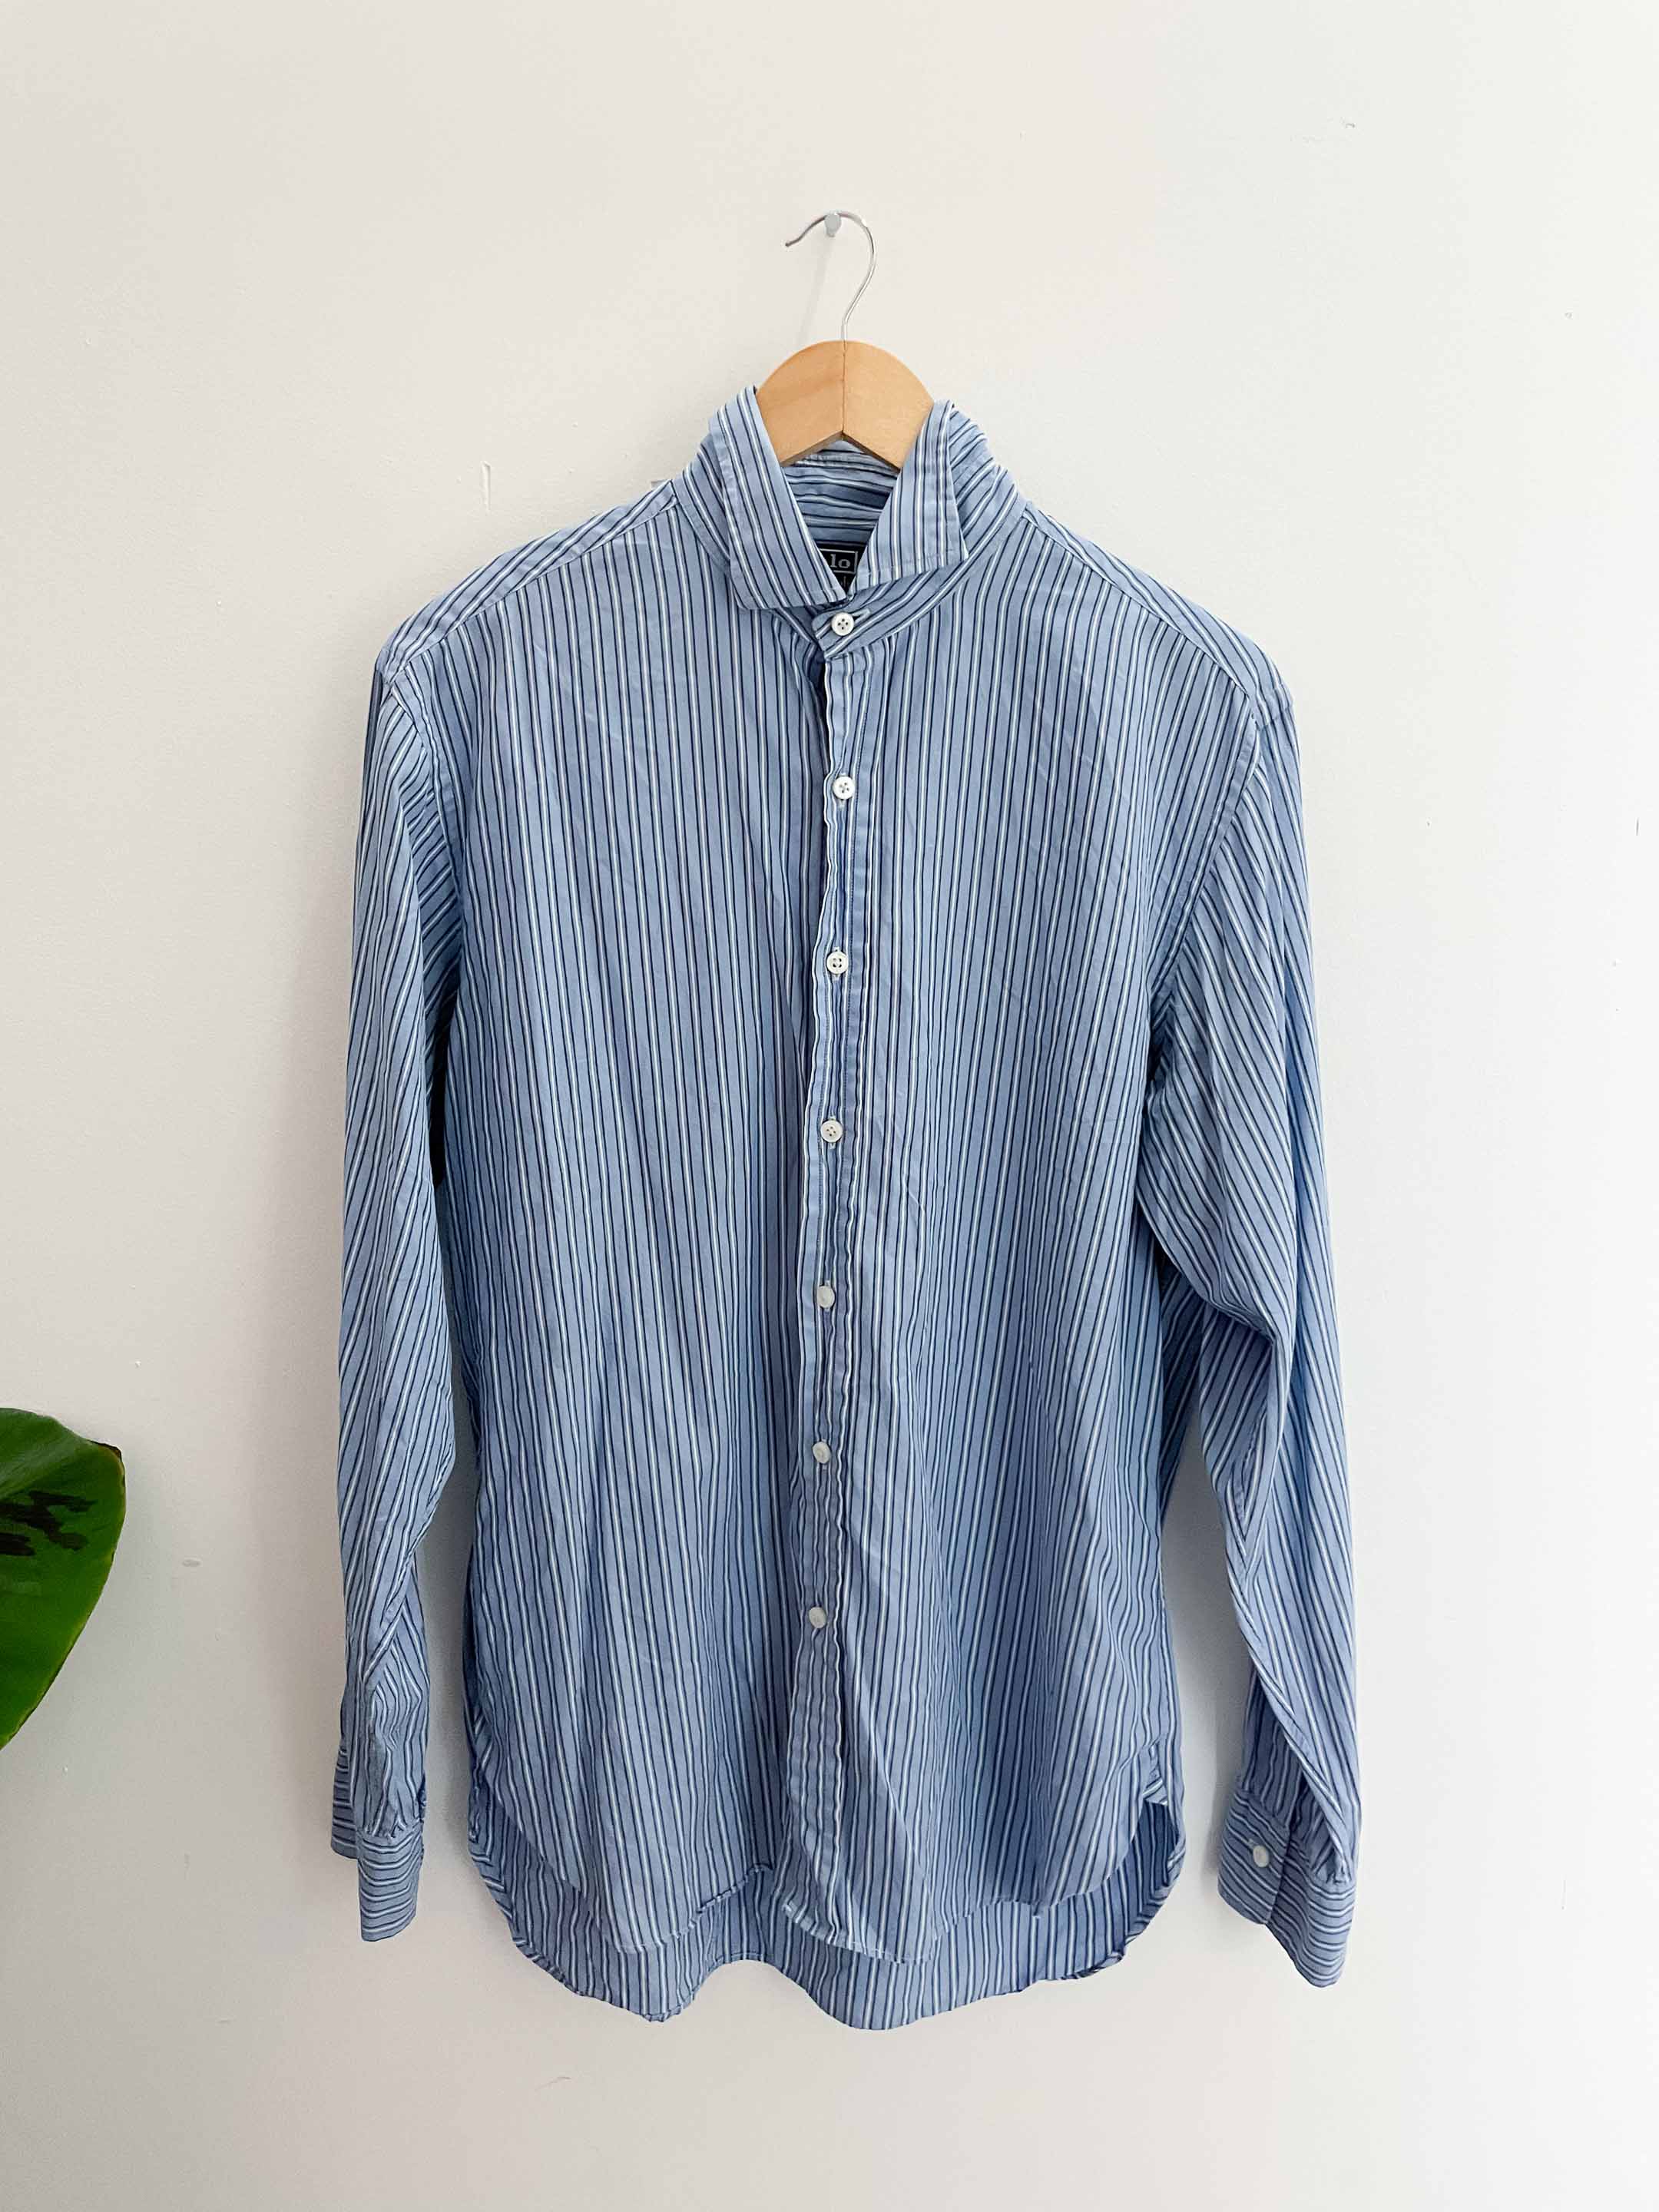 Vintage blue stripped polo ralph lauren custom fit mens shirt size L